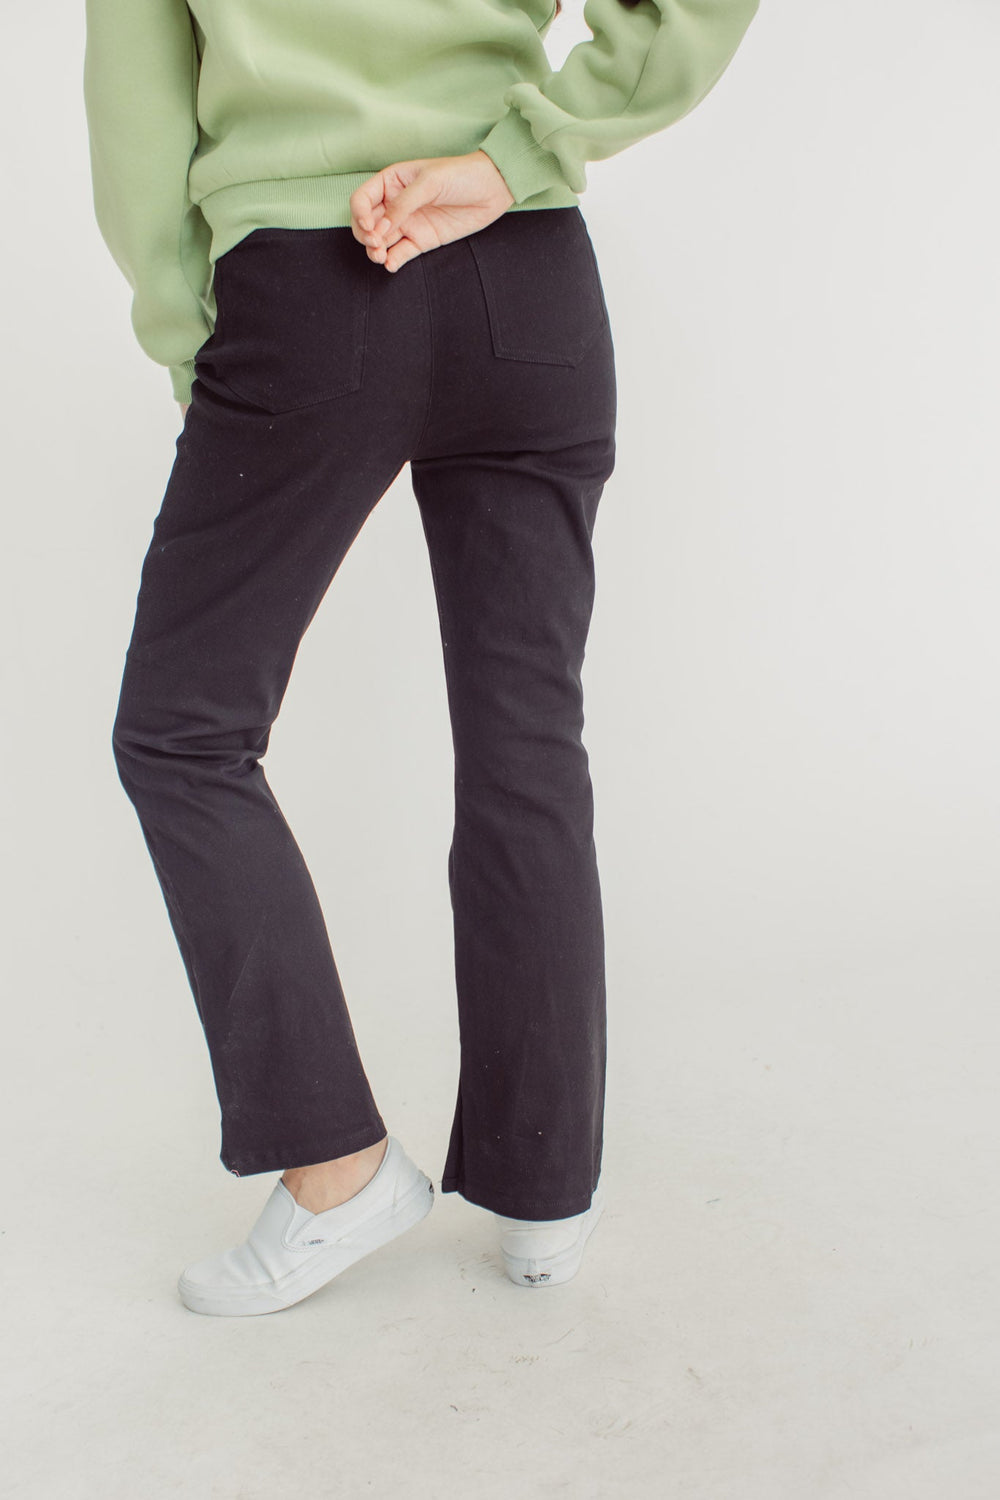 Black High Waisted Pants with Side Slit - Mossimo PH